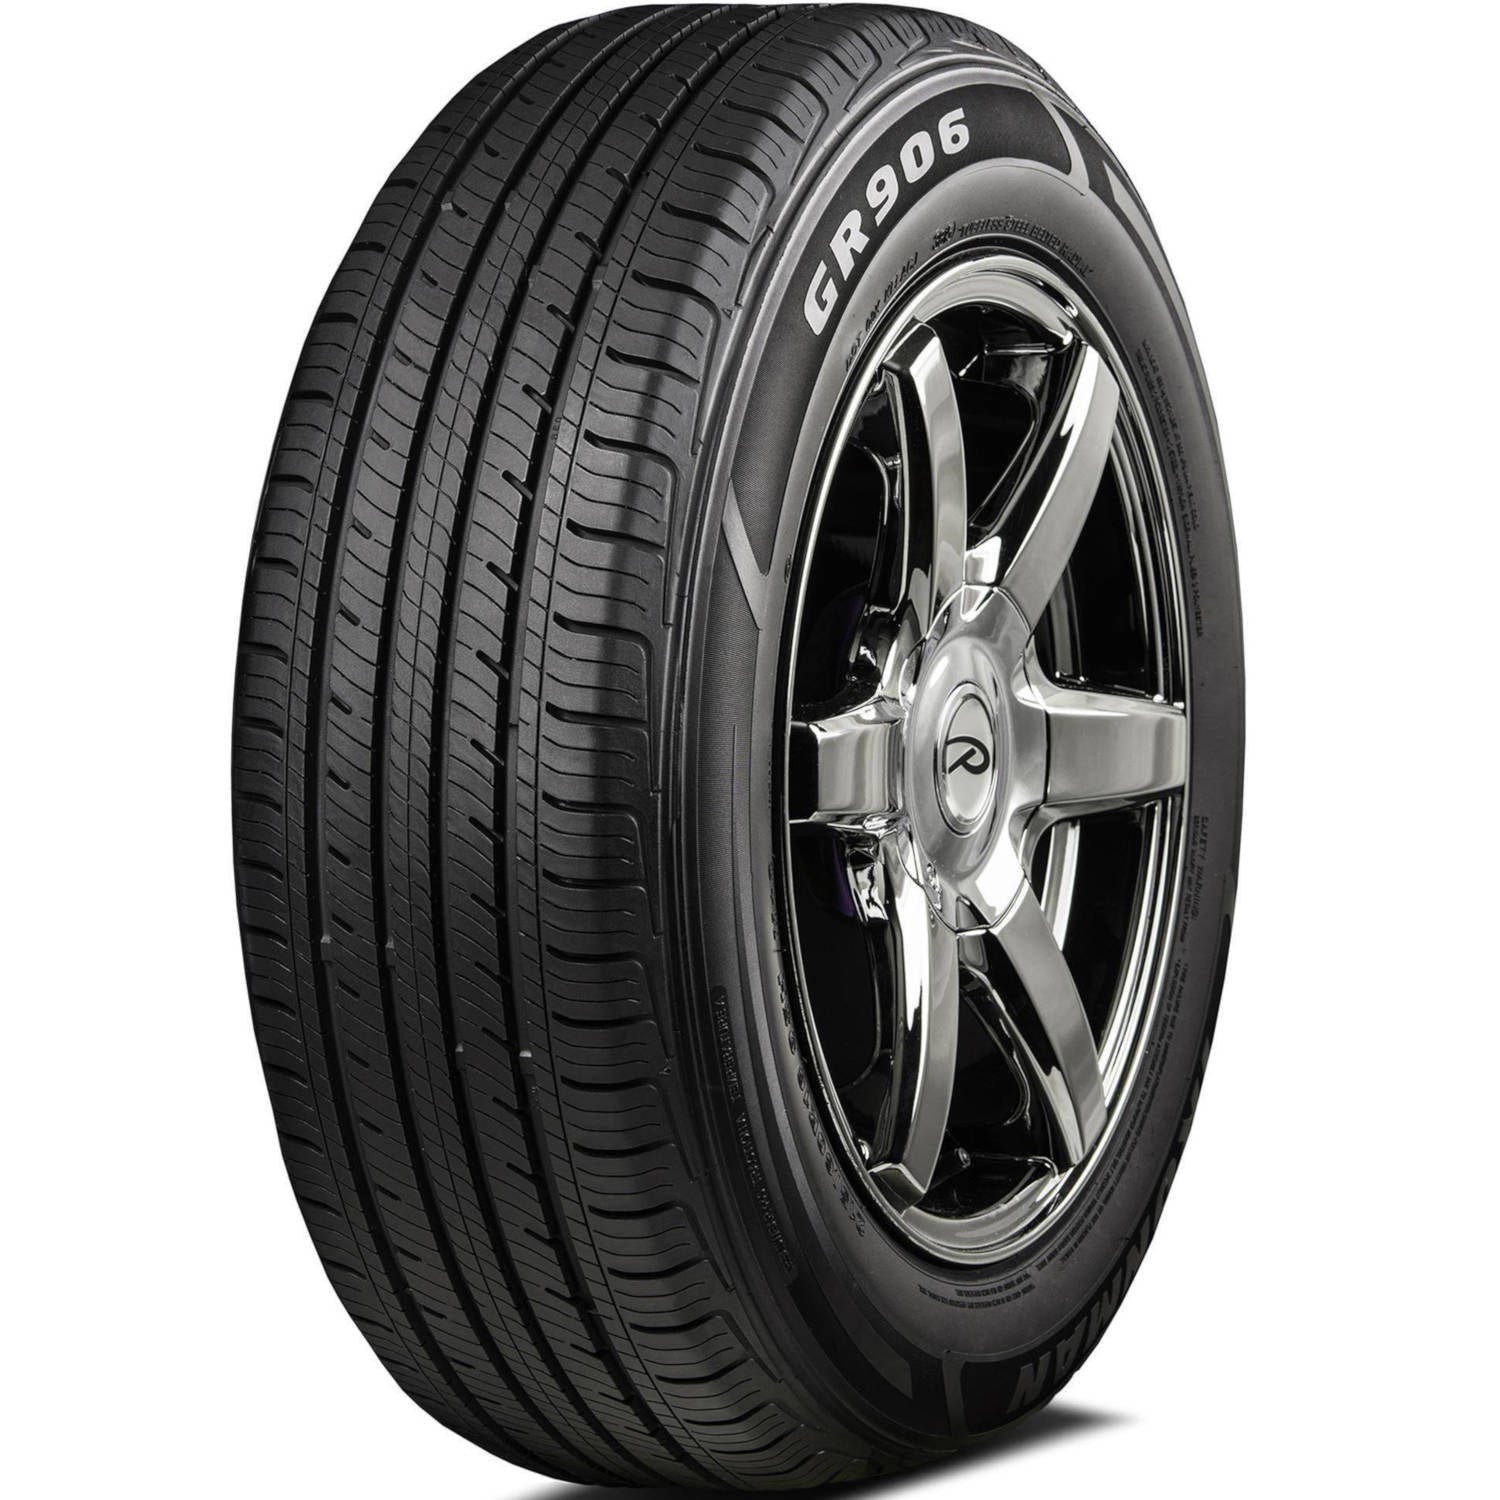 IRONMAN GR906 225/65R16 (27.5X8.9R 16) Tires